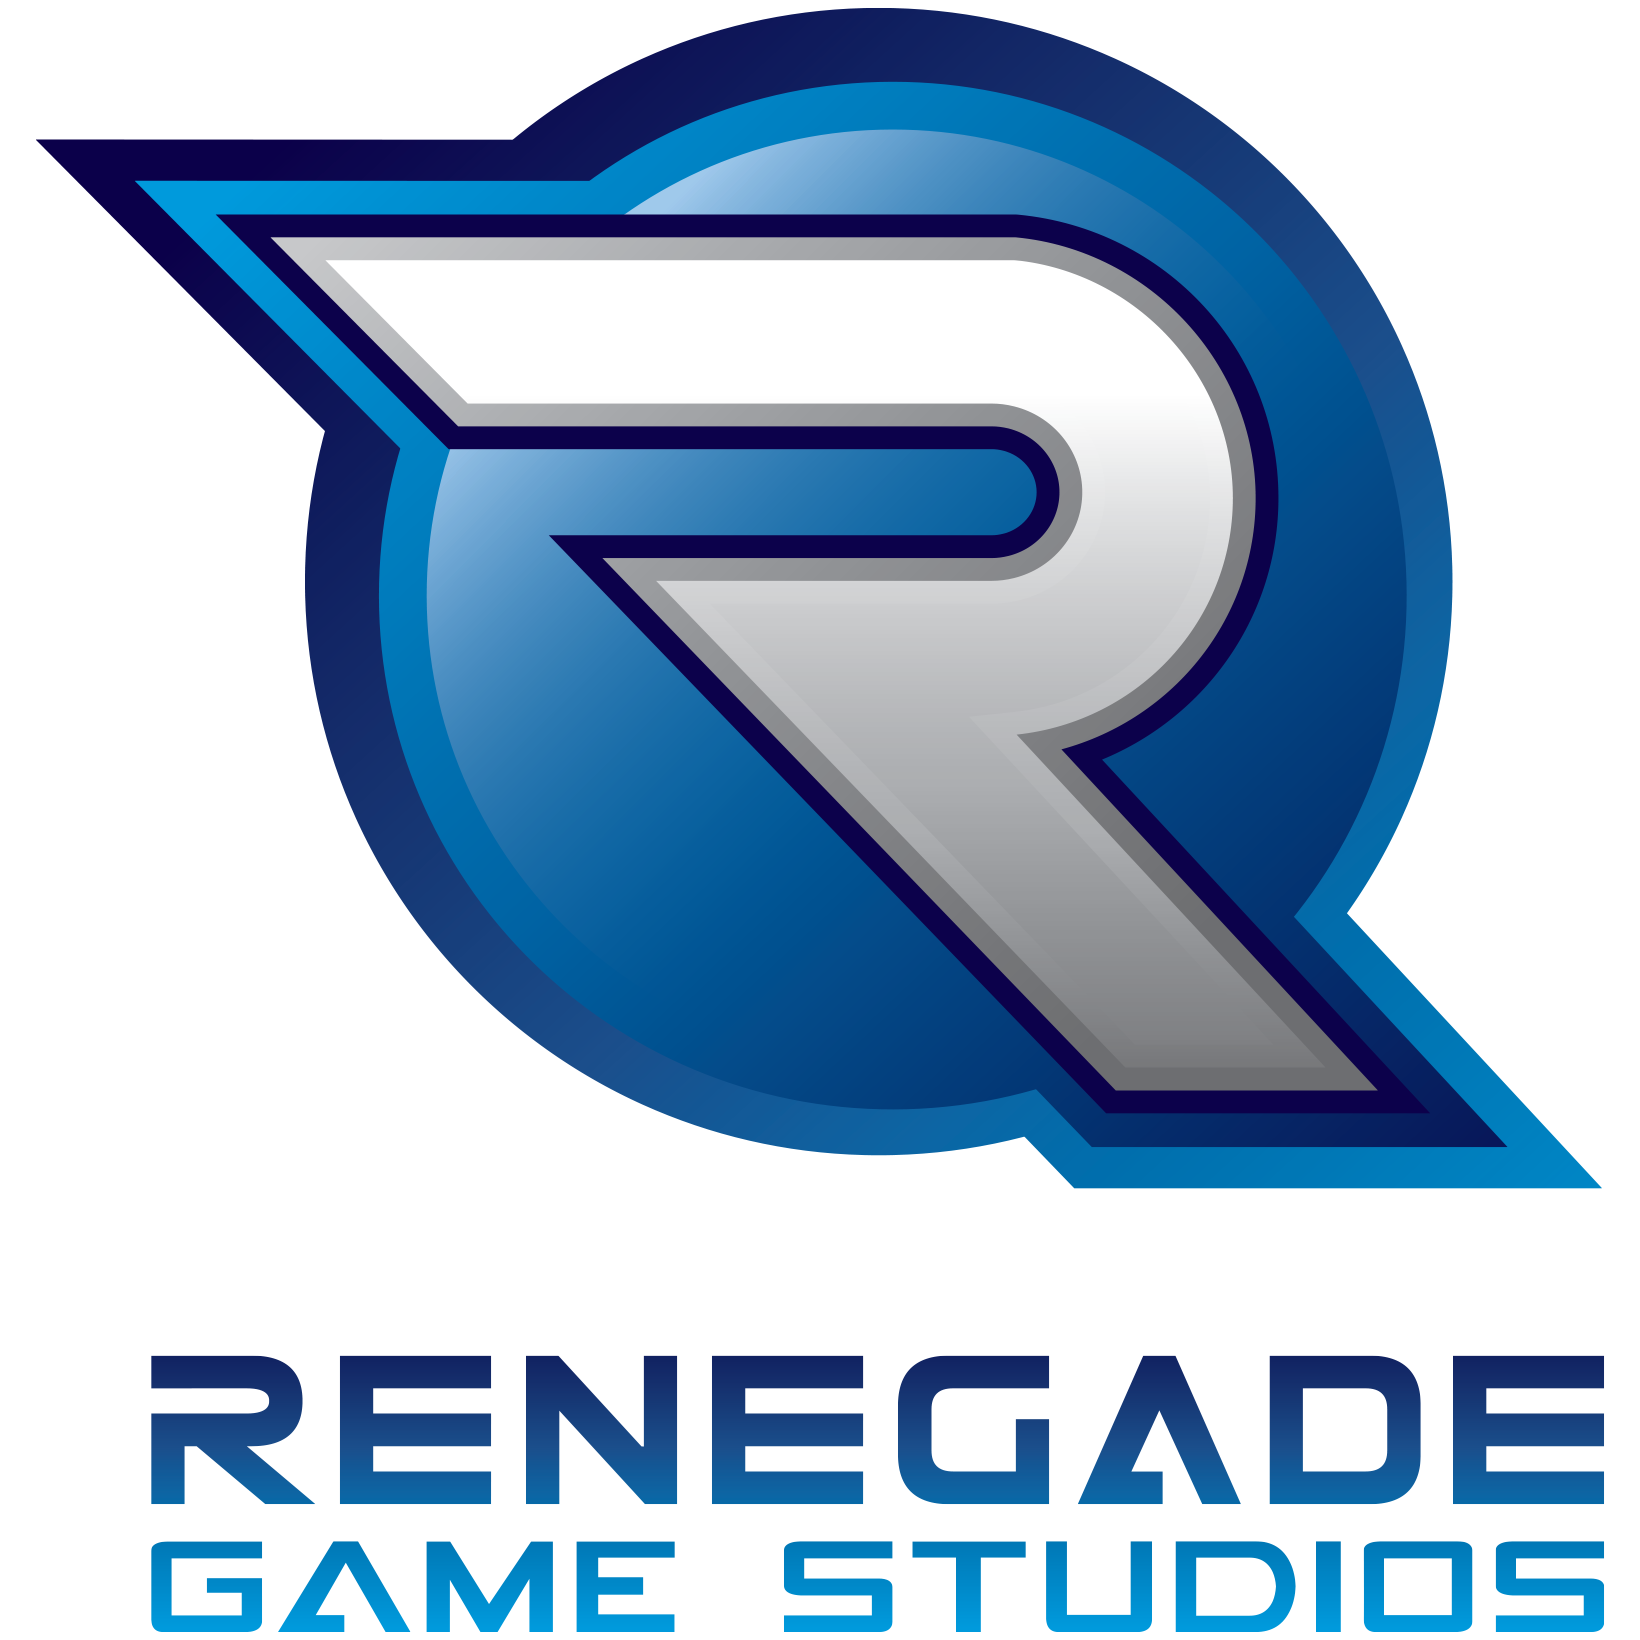 Renegade Games Studios Customer Support logo